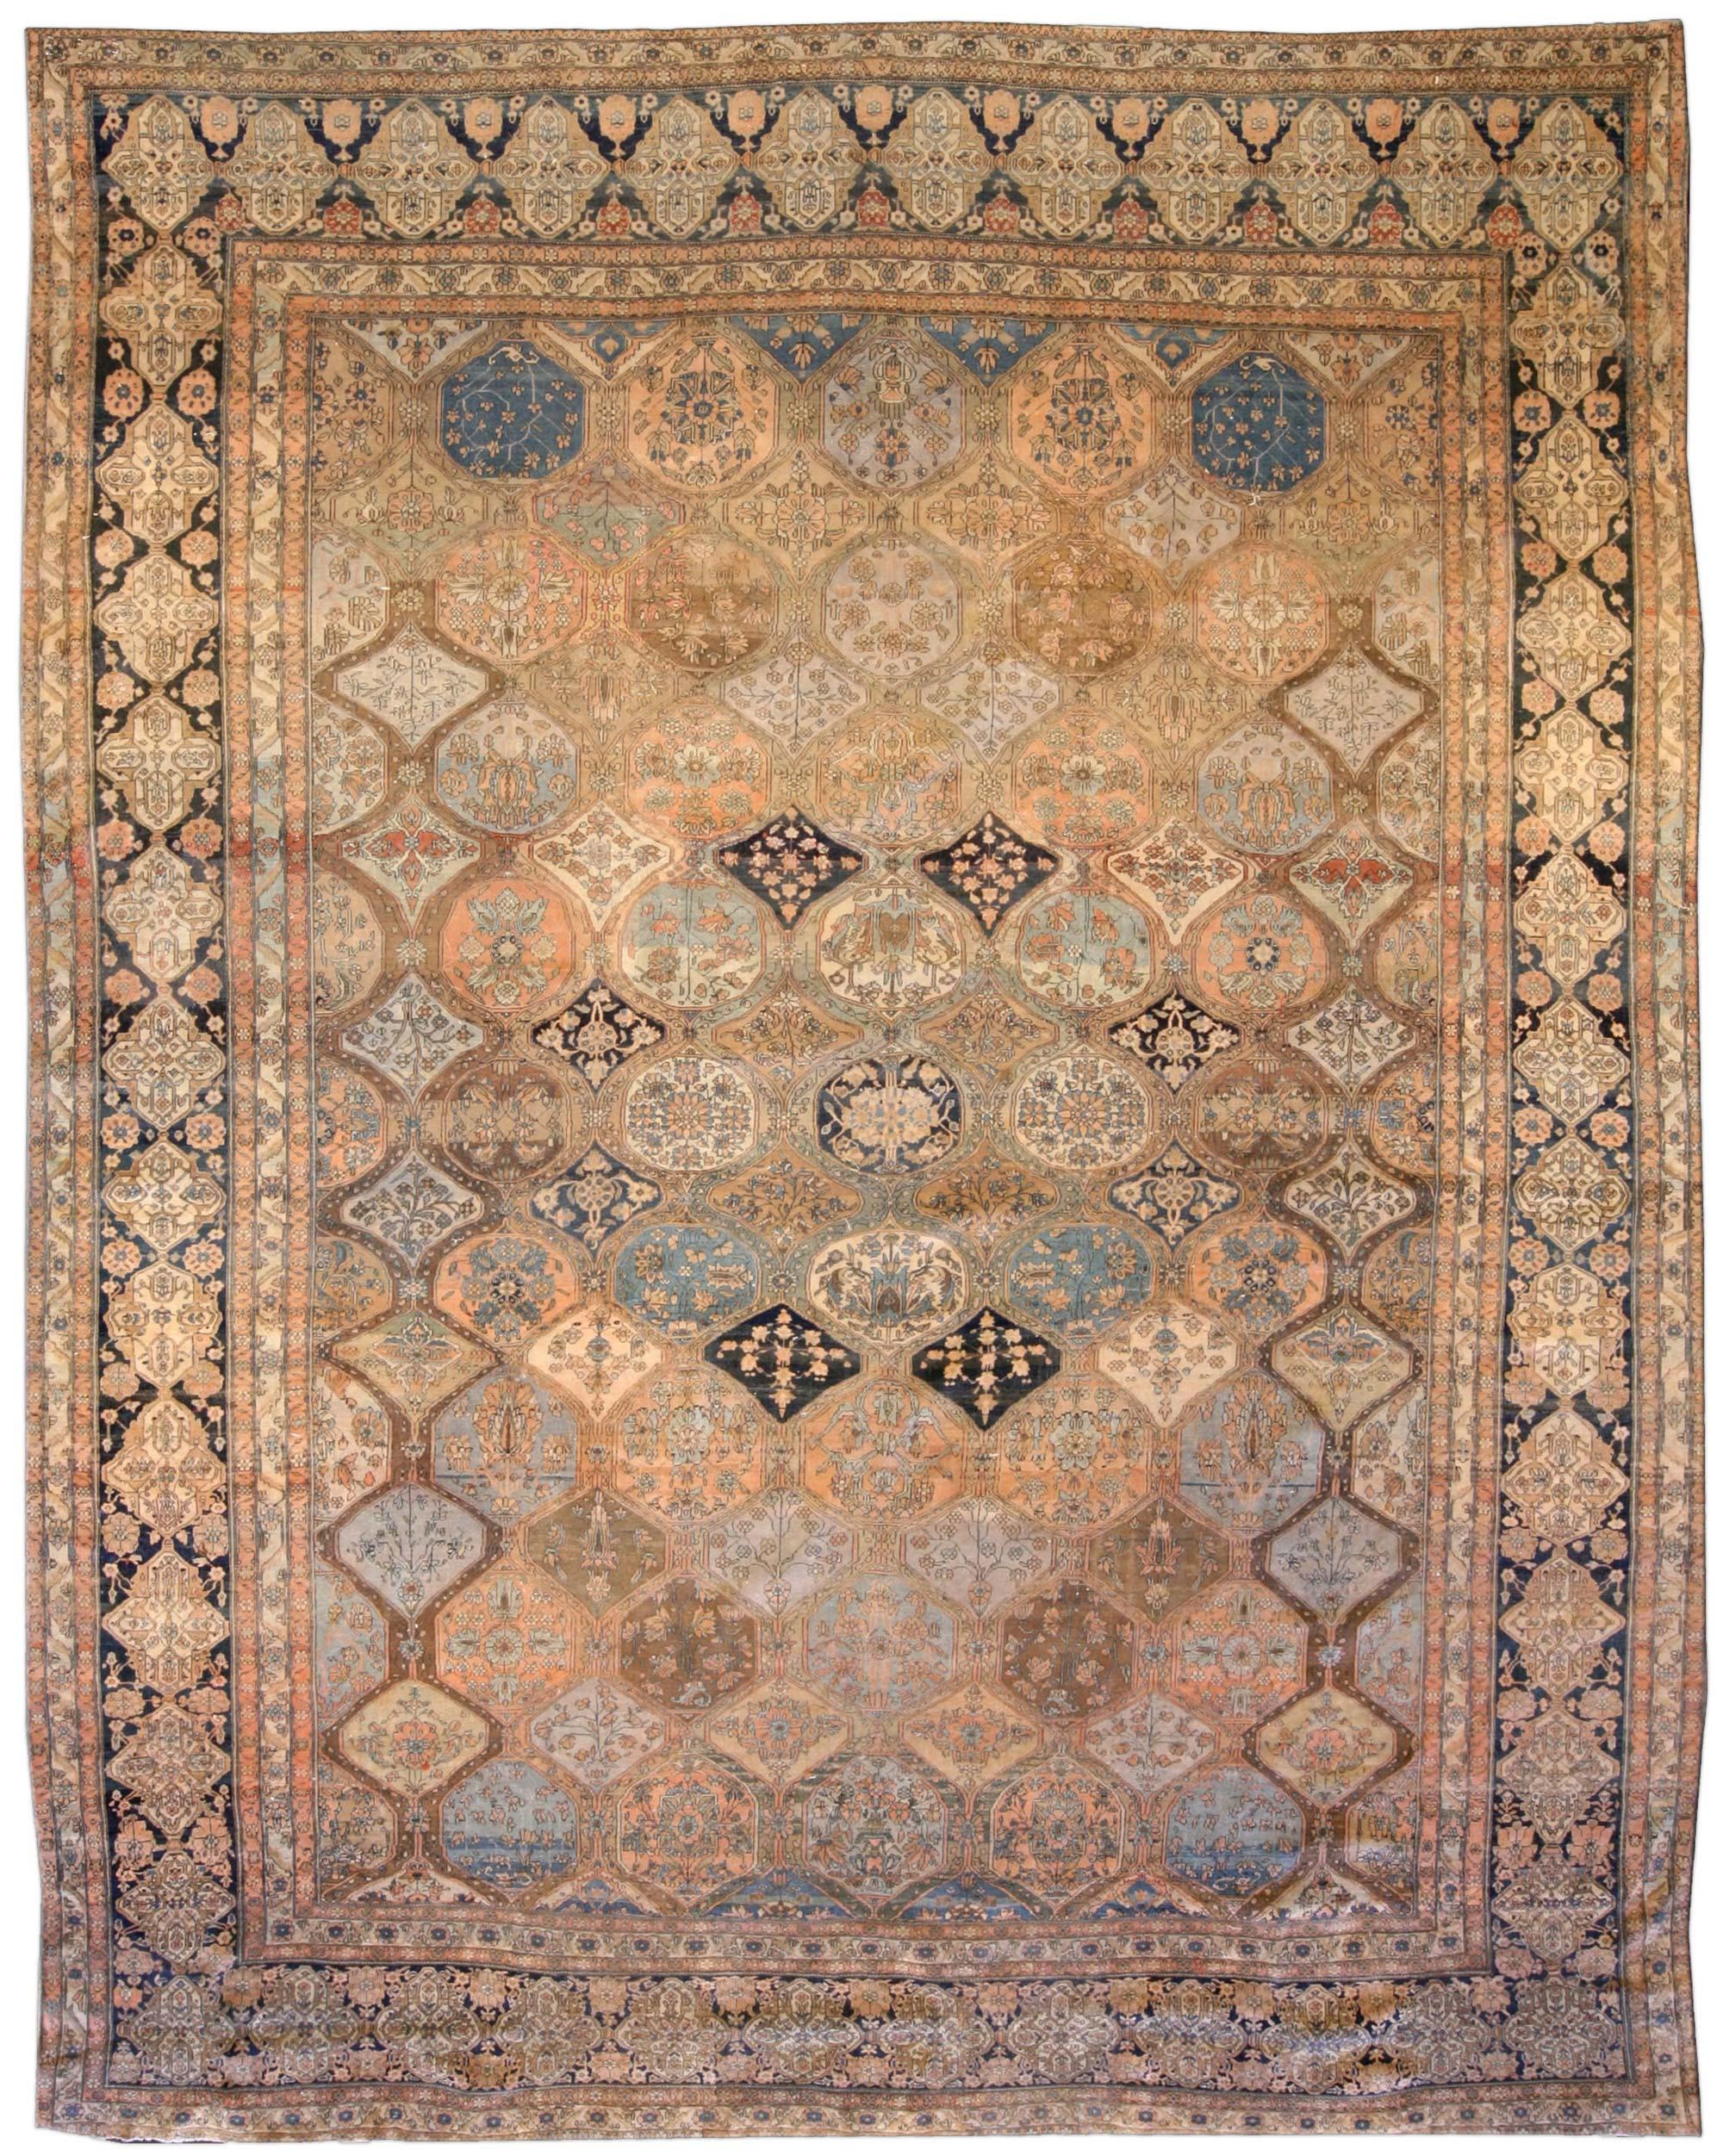 19th Century Persian Kashan Handmade Wool Rug For Sale